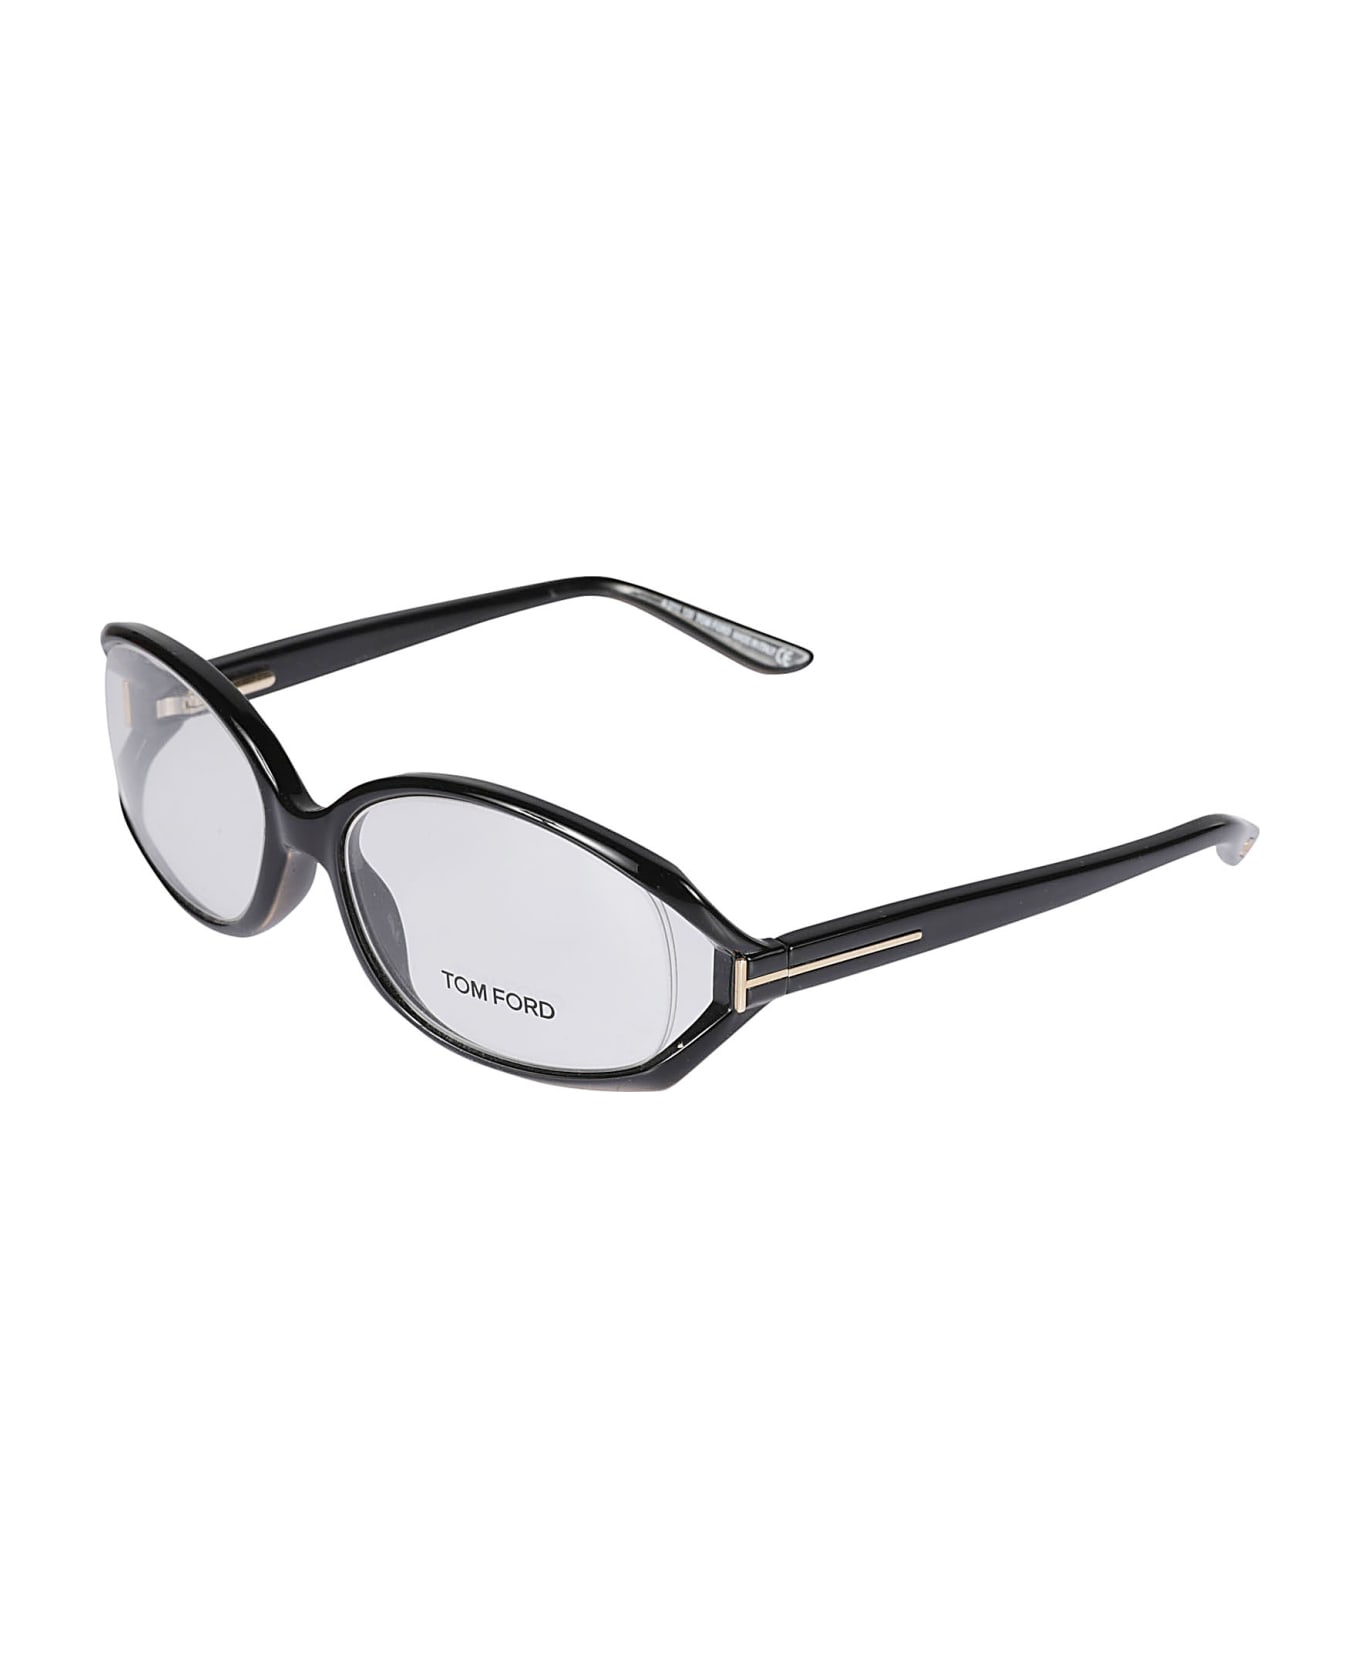 Tom Ford Eyewear Classic Clear Lense Glasses - 001